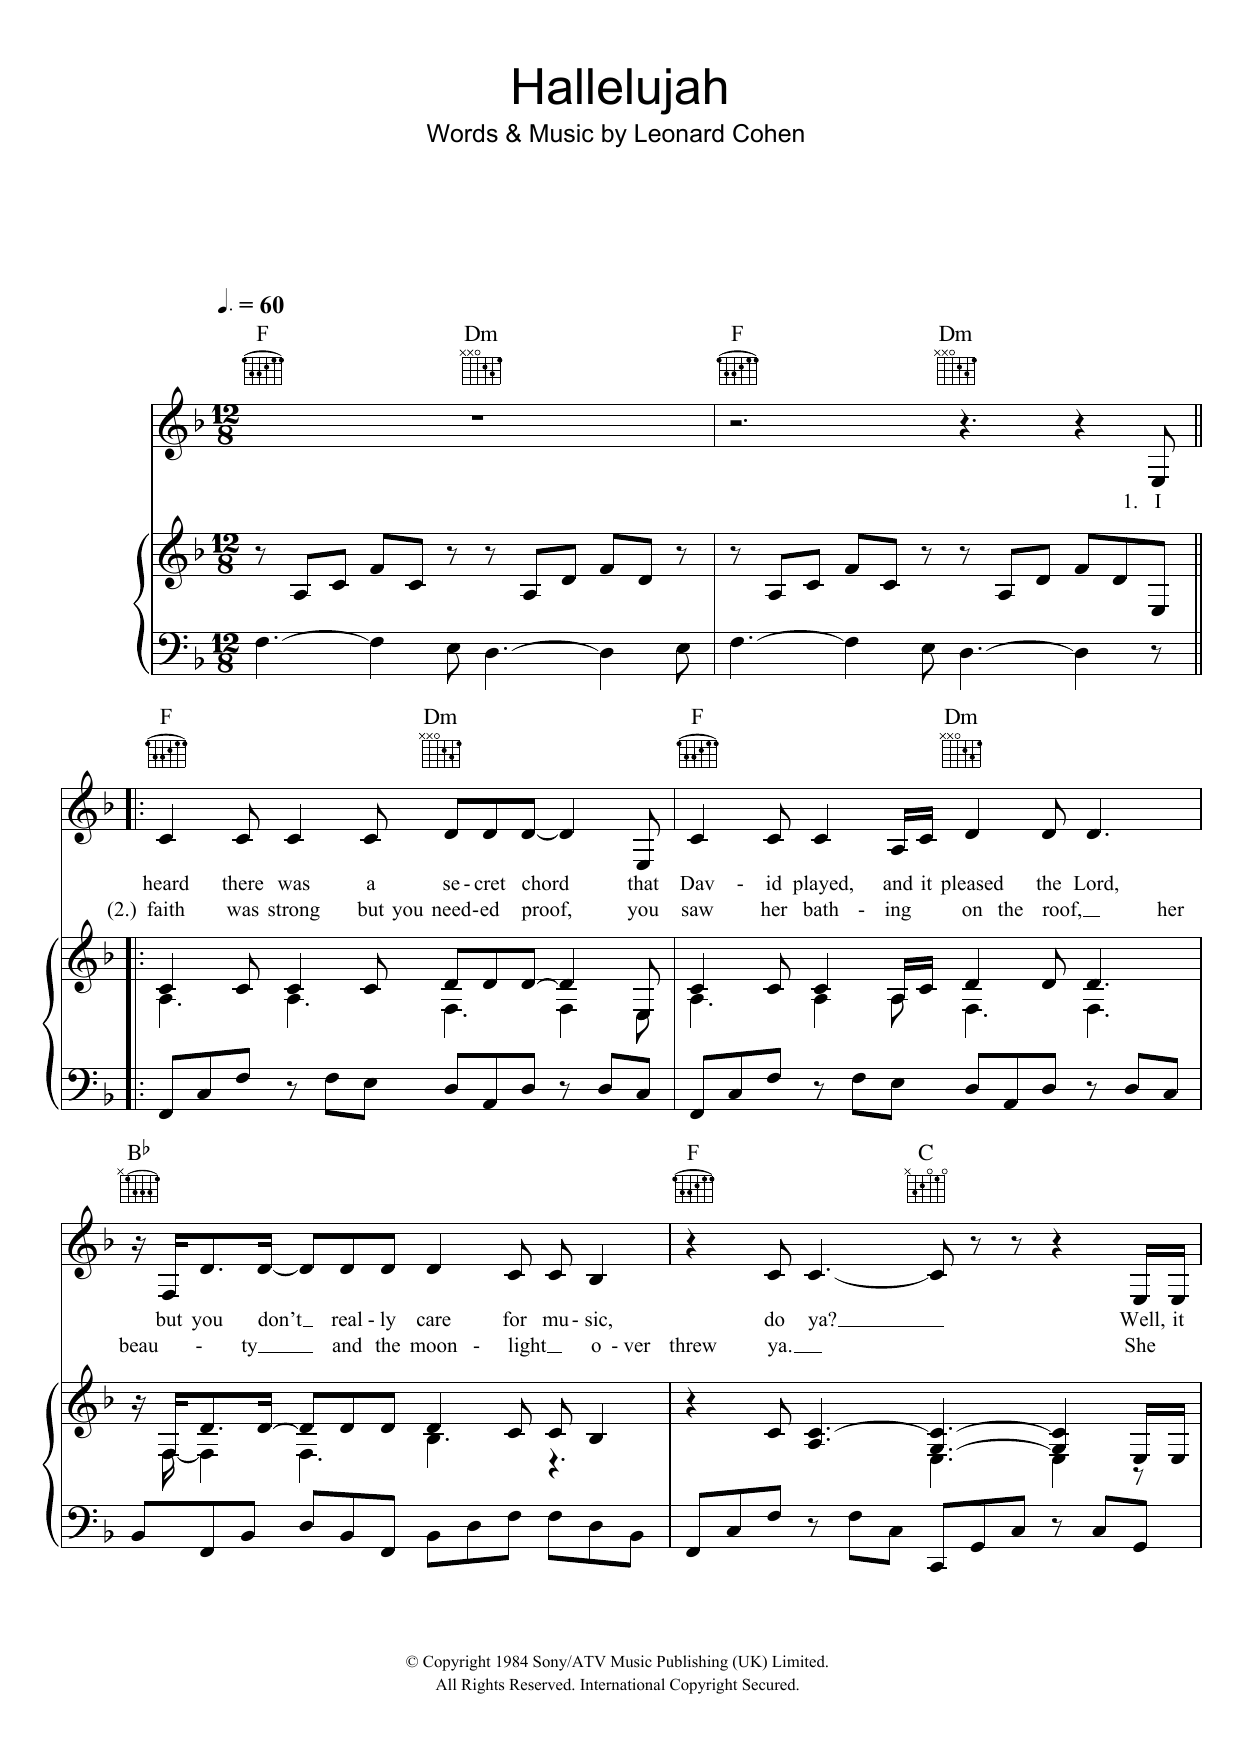 Alexandra Burke Hallelujah Sheet Music Notes & Chords for Flute - Download or Print PDF